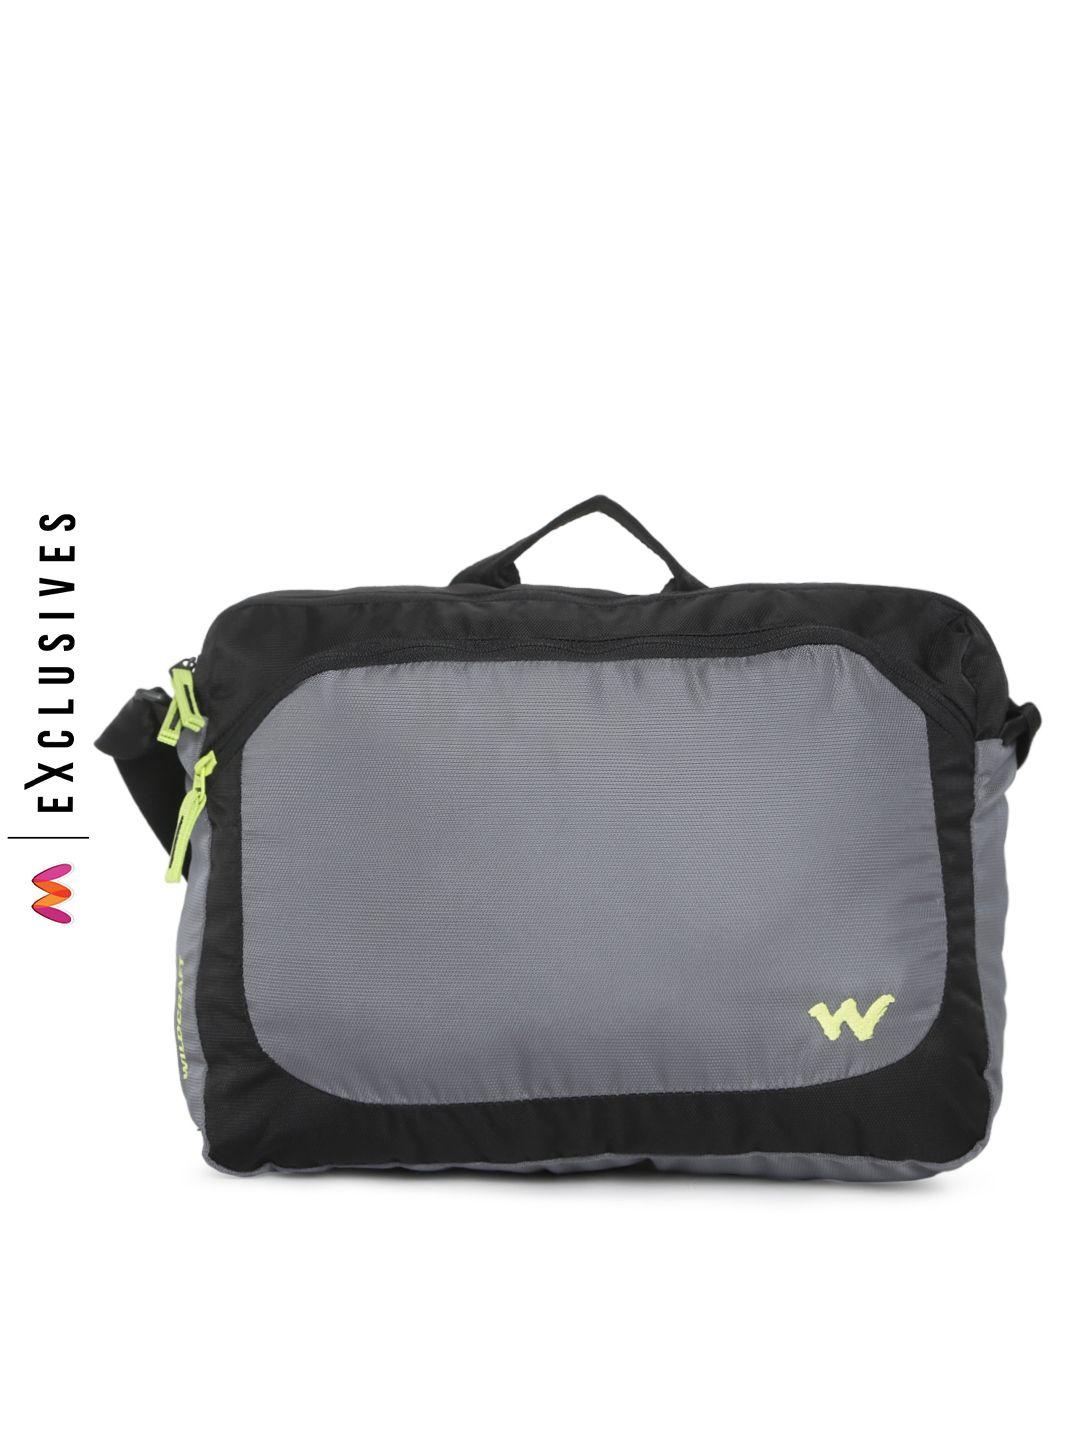 wildcraft unisex black & grey colourblocked courier 2 messenger bag